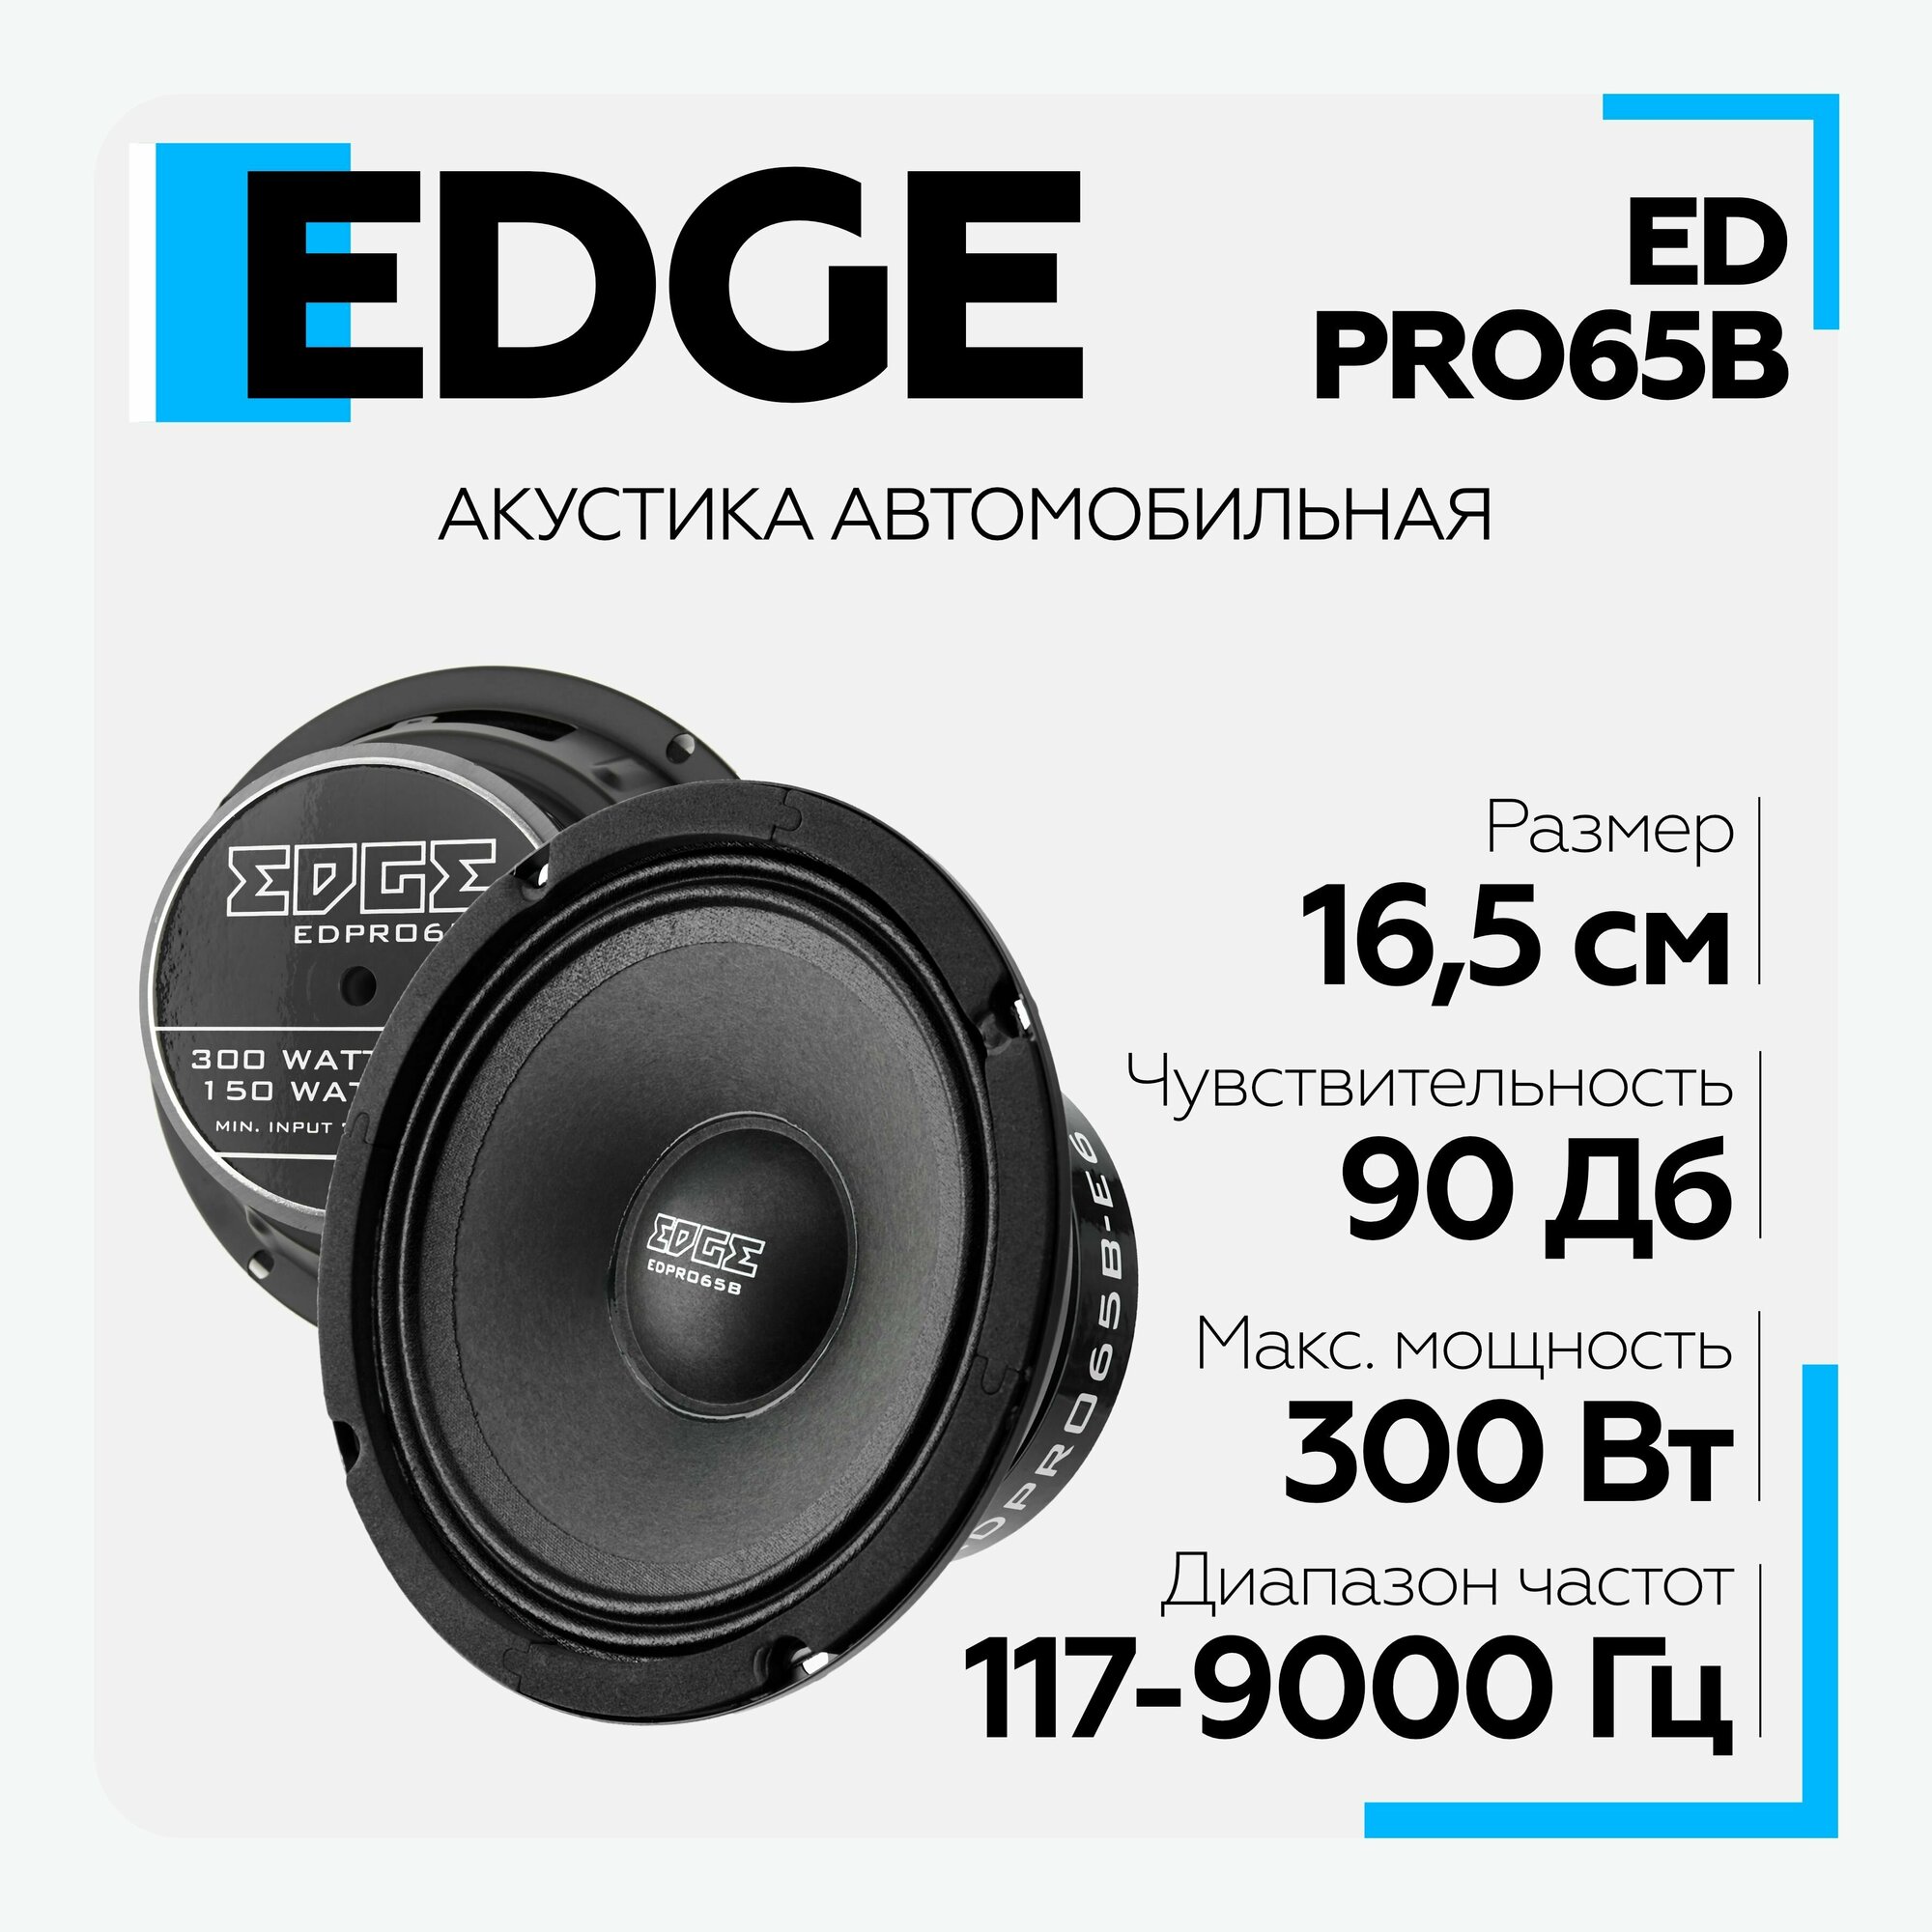 Акустическая система EDGE EDPRO65B-E6 (2 шт.) мидбасс